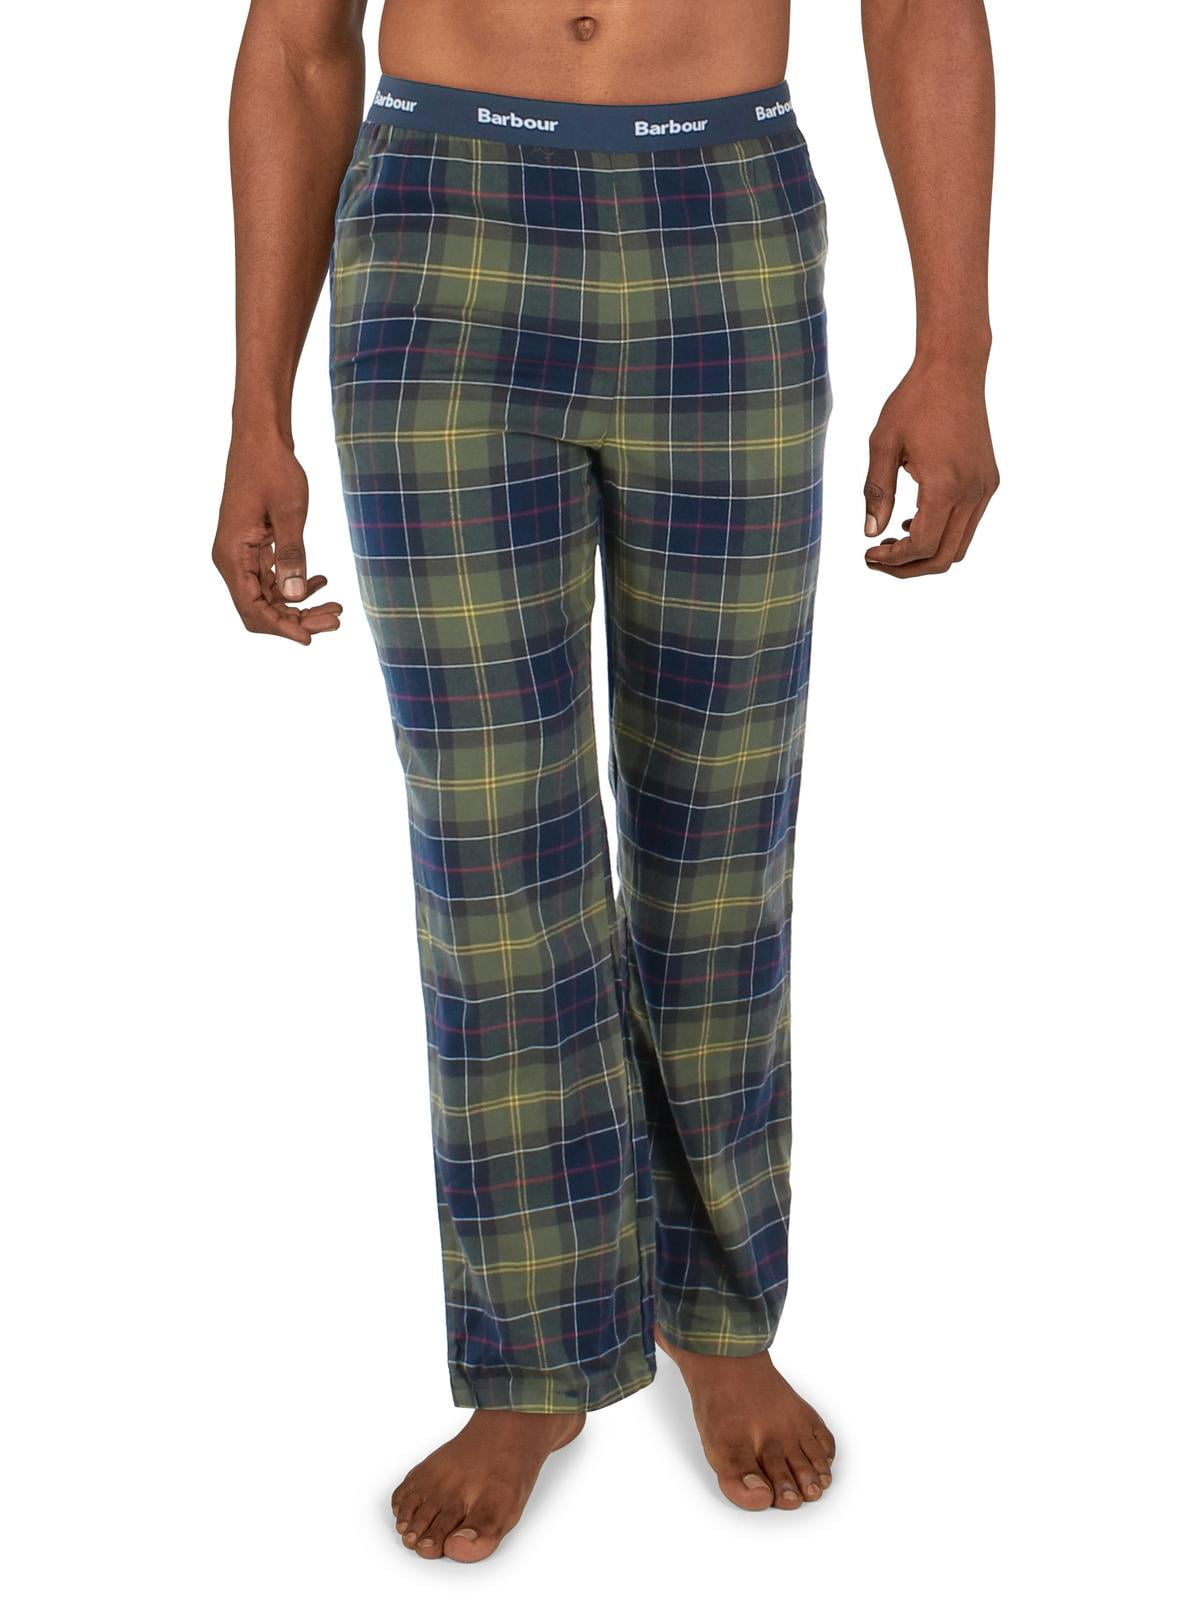 Barbour Mens Comfy Sleepwear Pajama Bottoms - Walmart.com